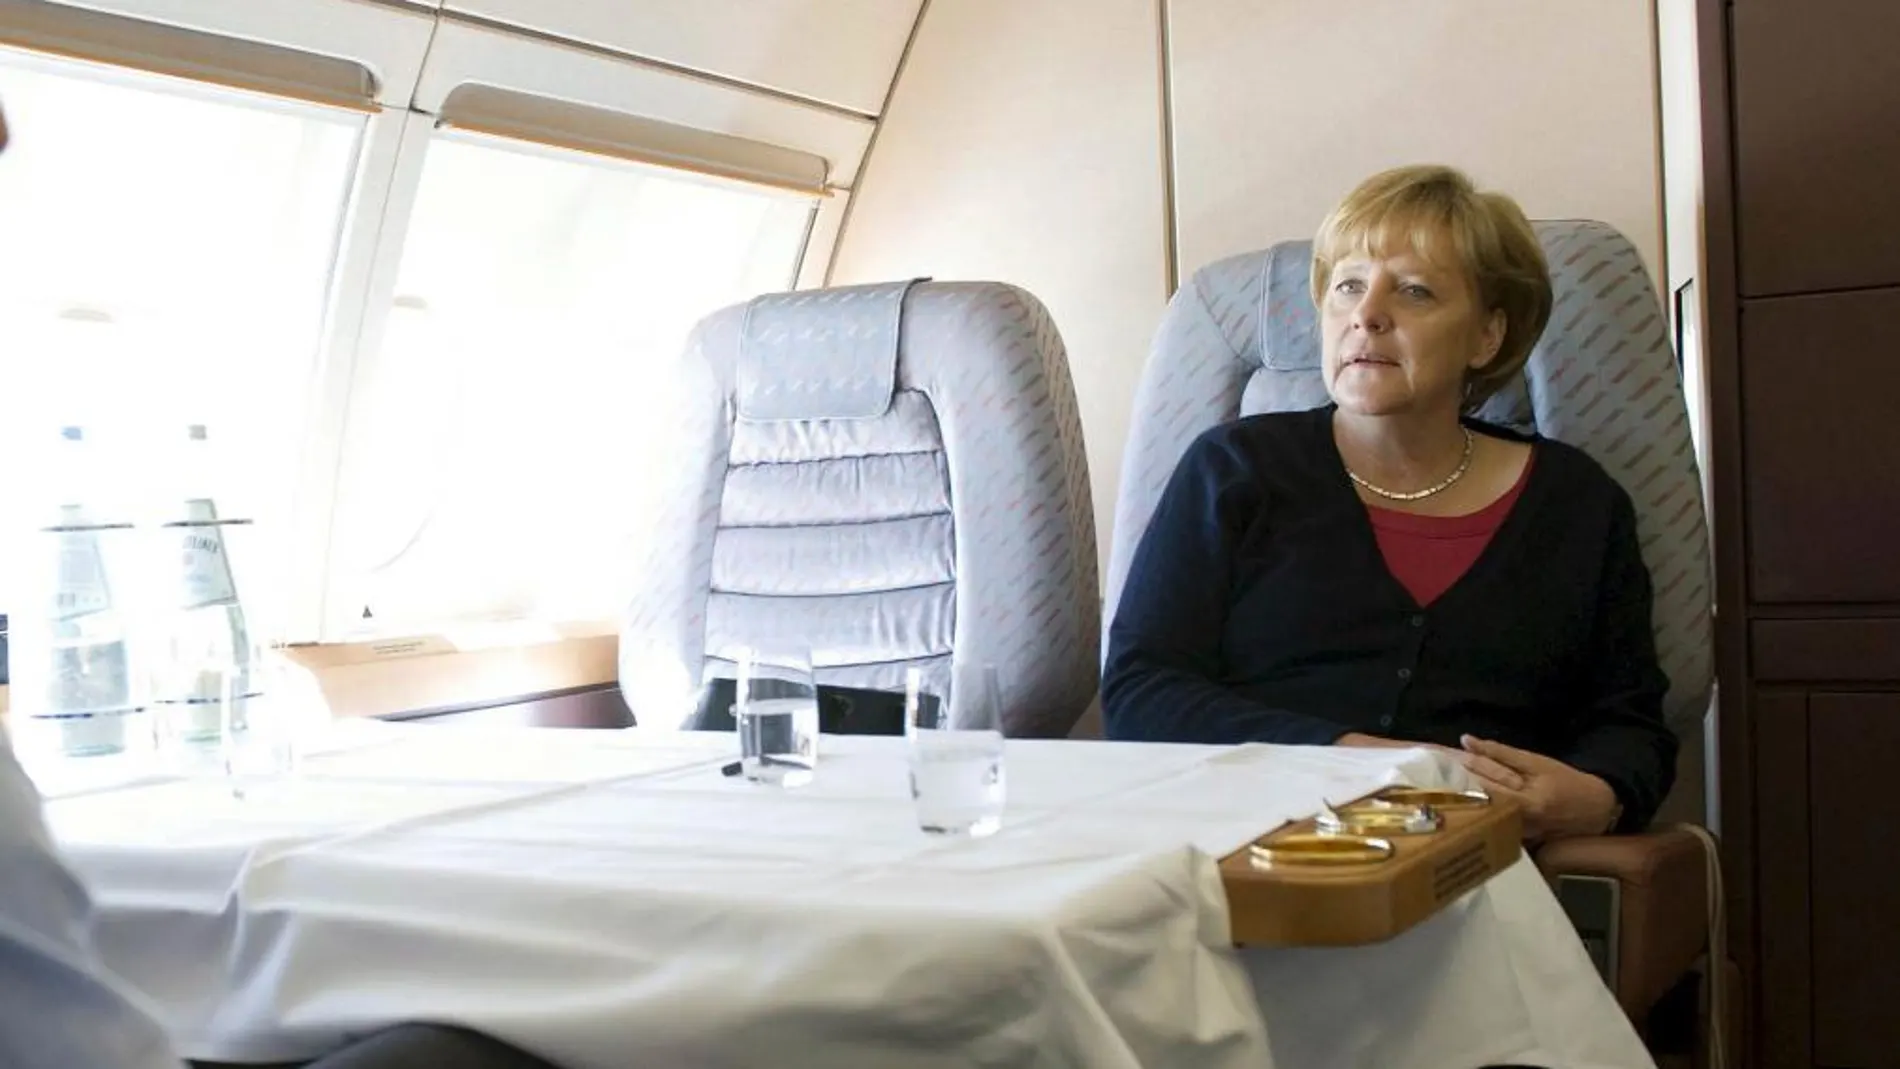 Angela Merkel en el avión presidencial